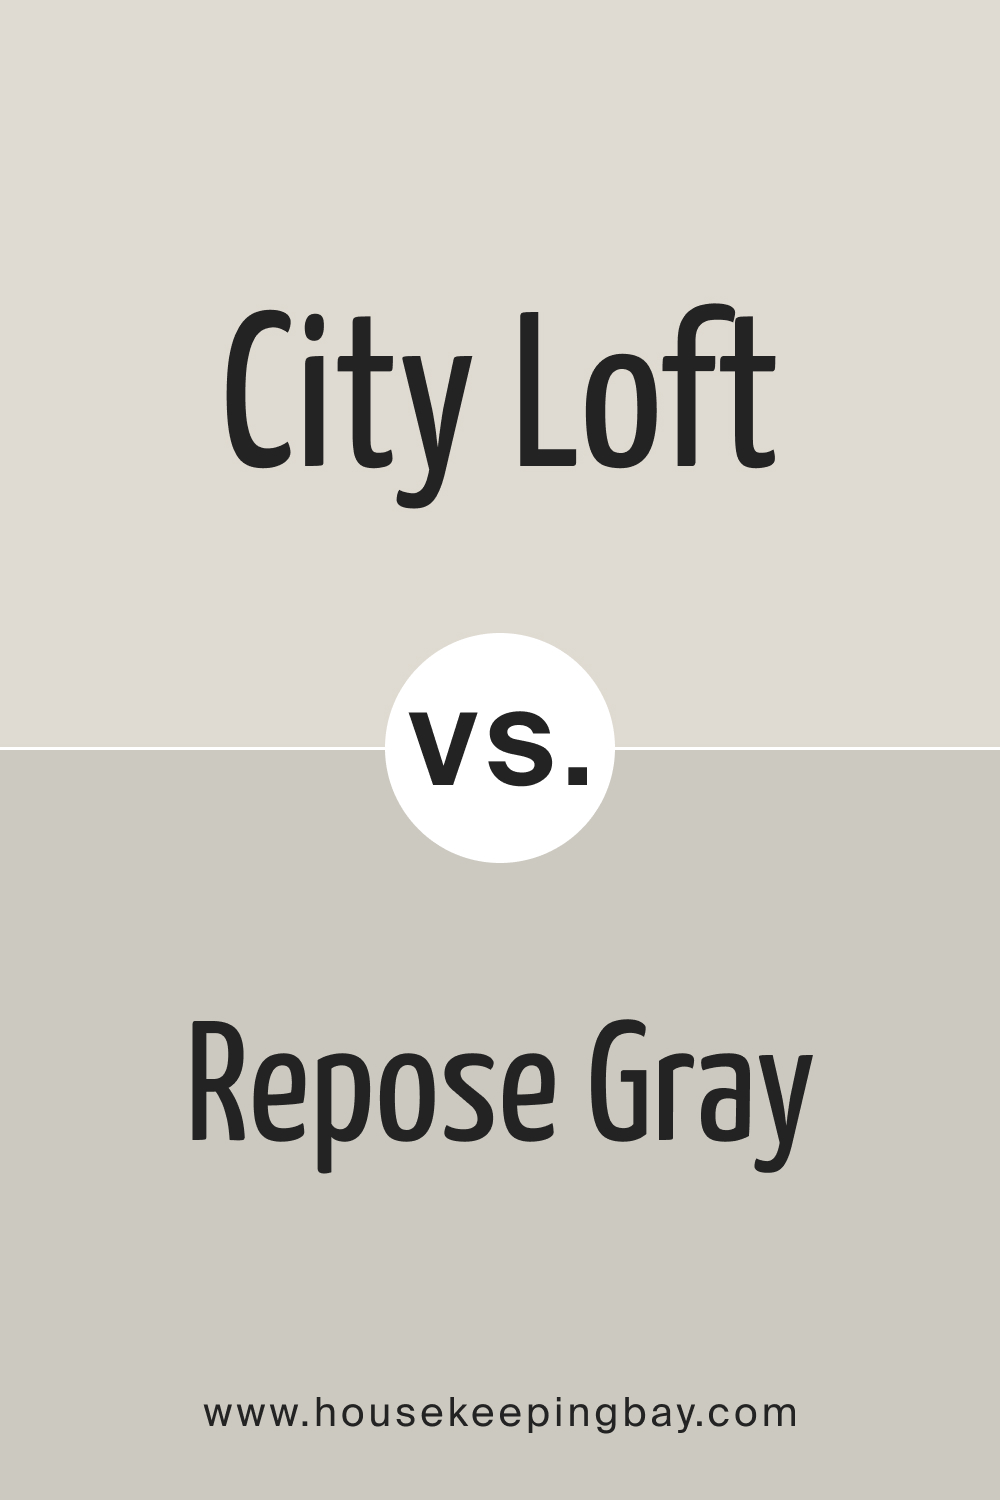 City Loft vs Repose Gray